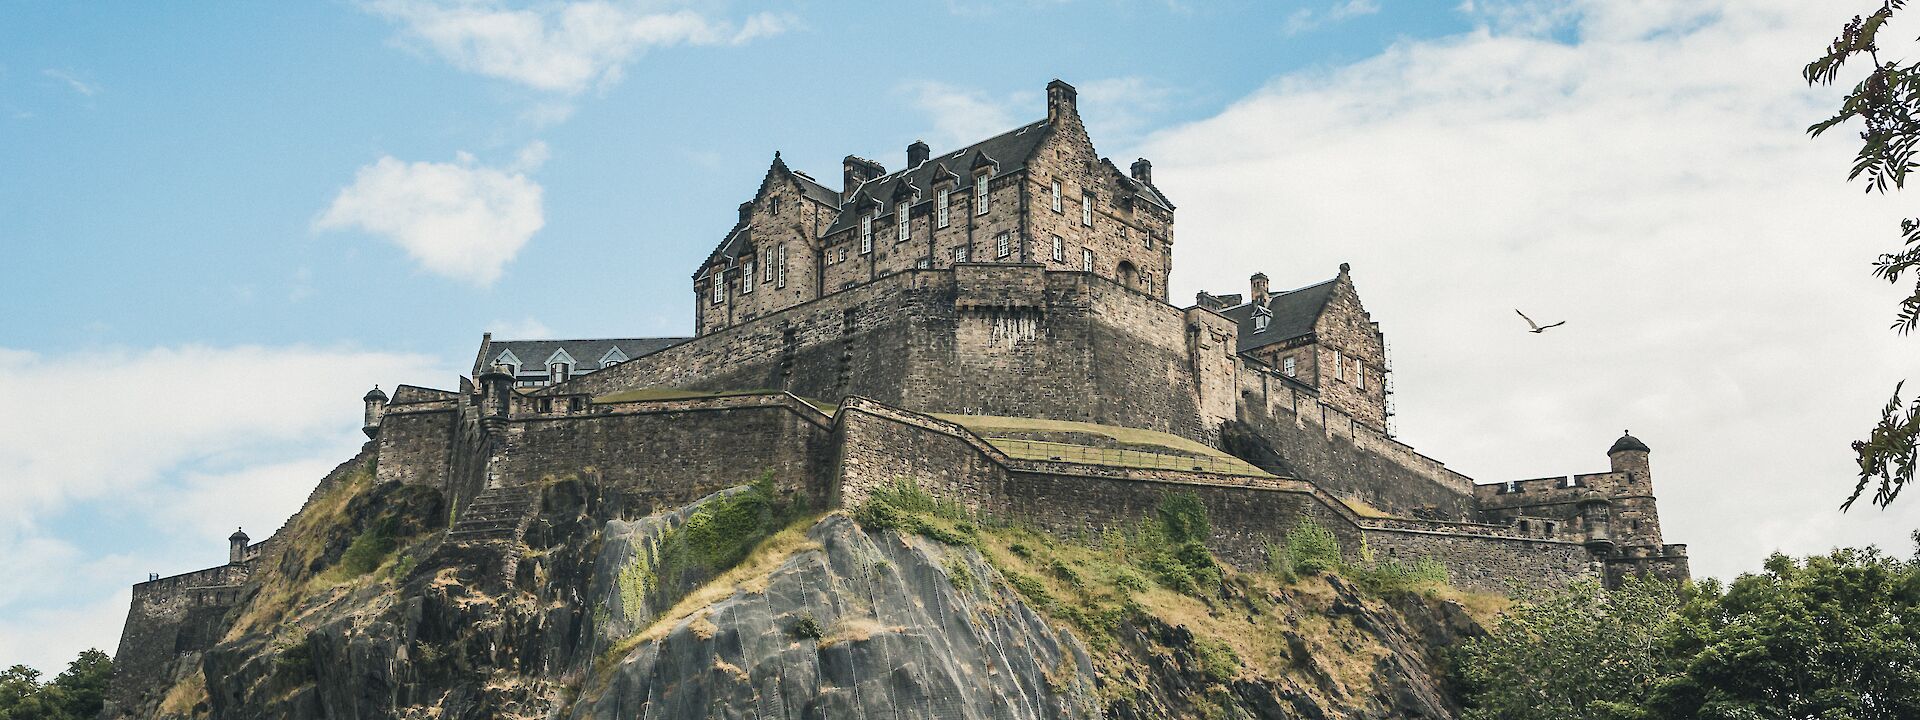 Edinburgh Castle, Scotland. Jorg Angeli@Unsplash